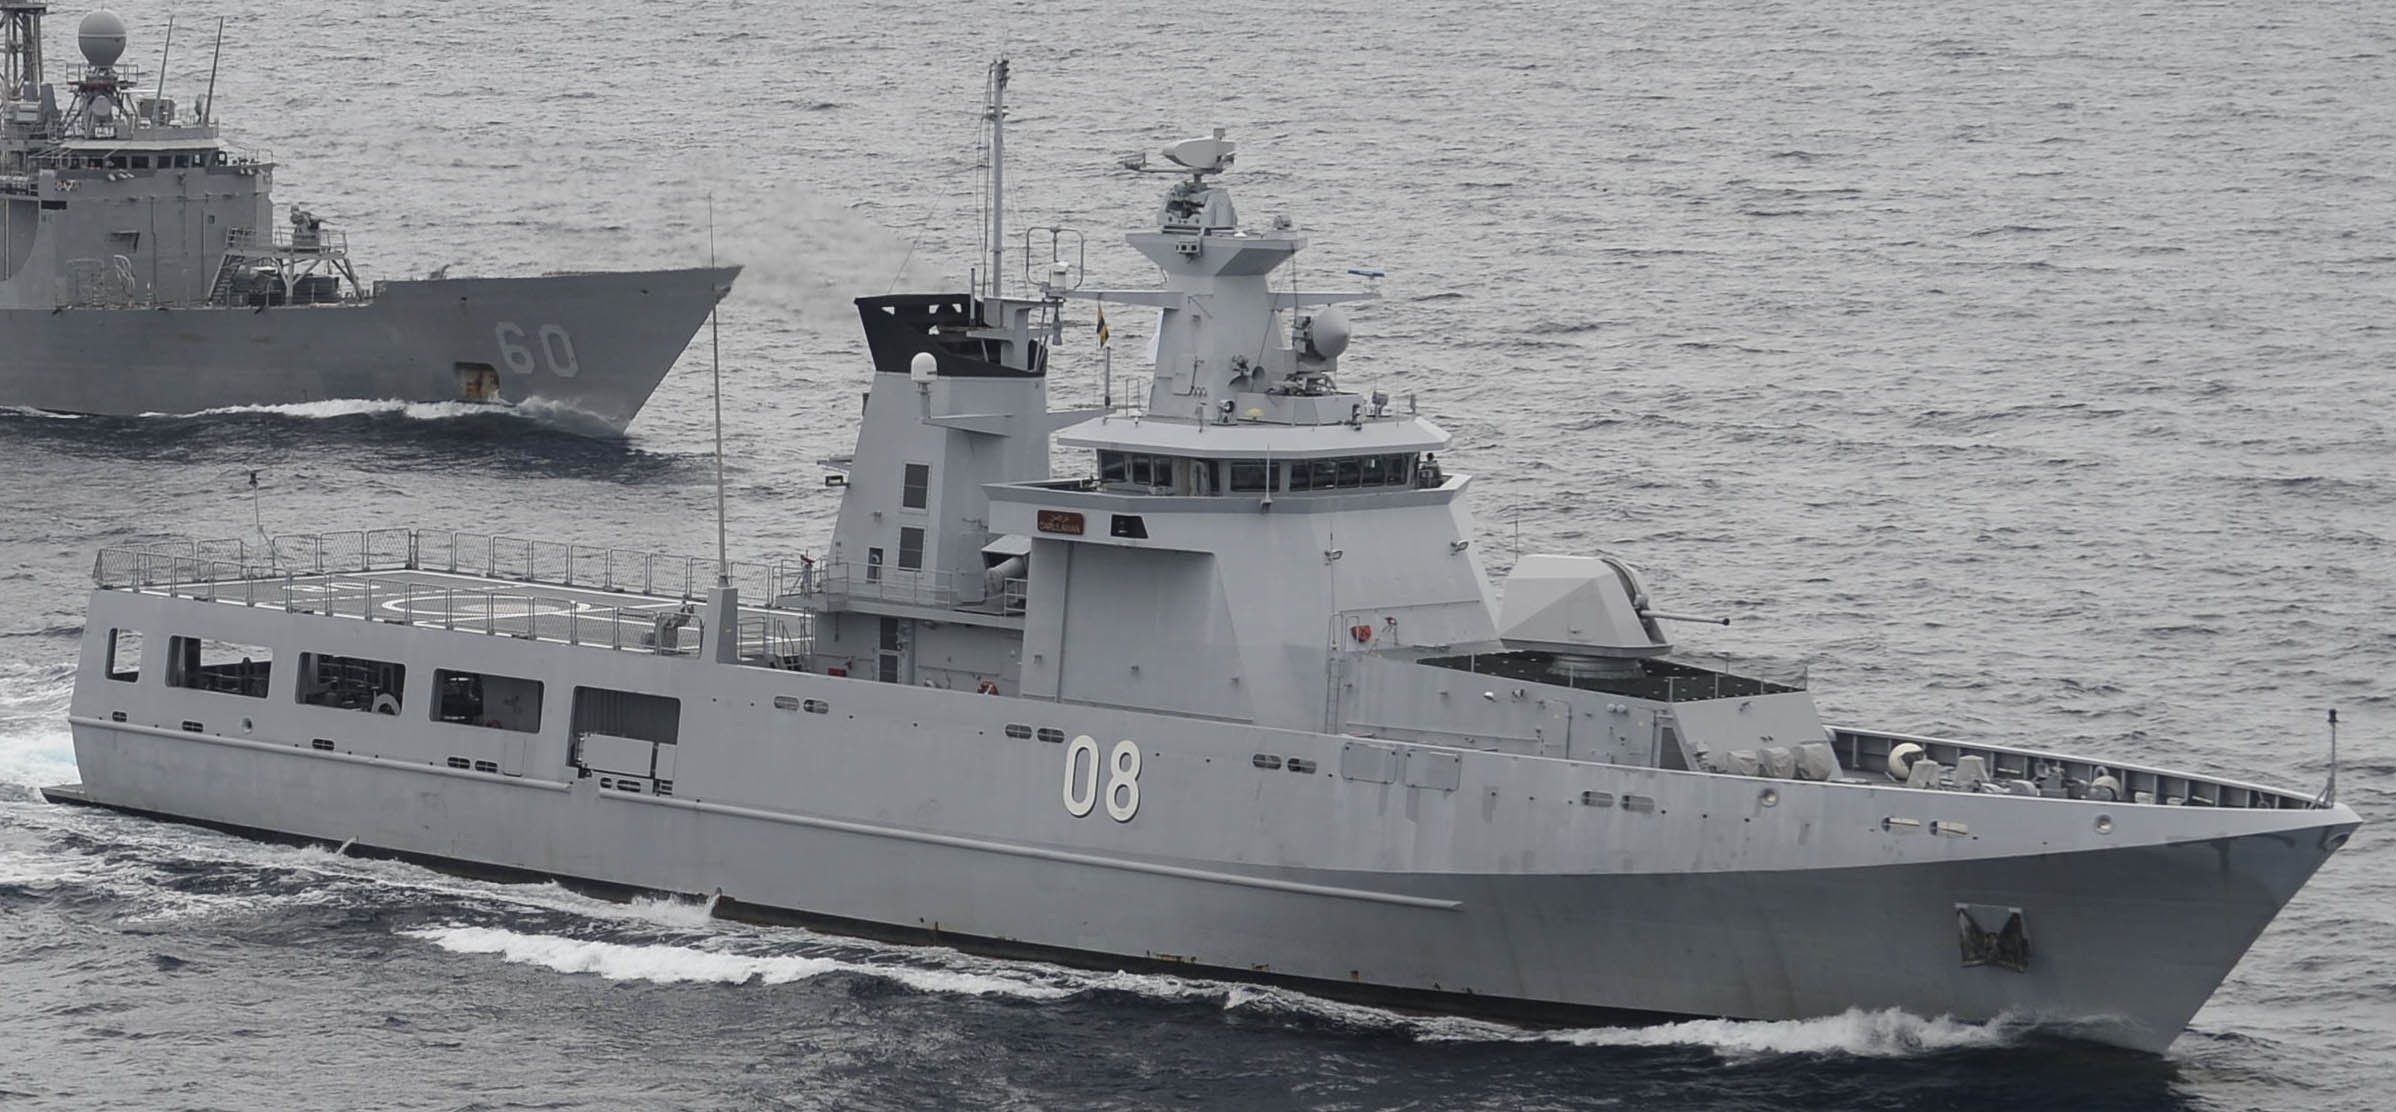 opv 08 kdb darulaman offshore patrol vessel darussalem class royal brunei navy 06